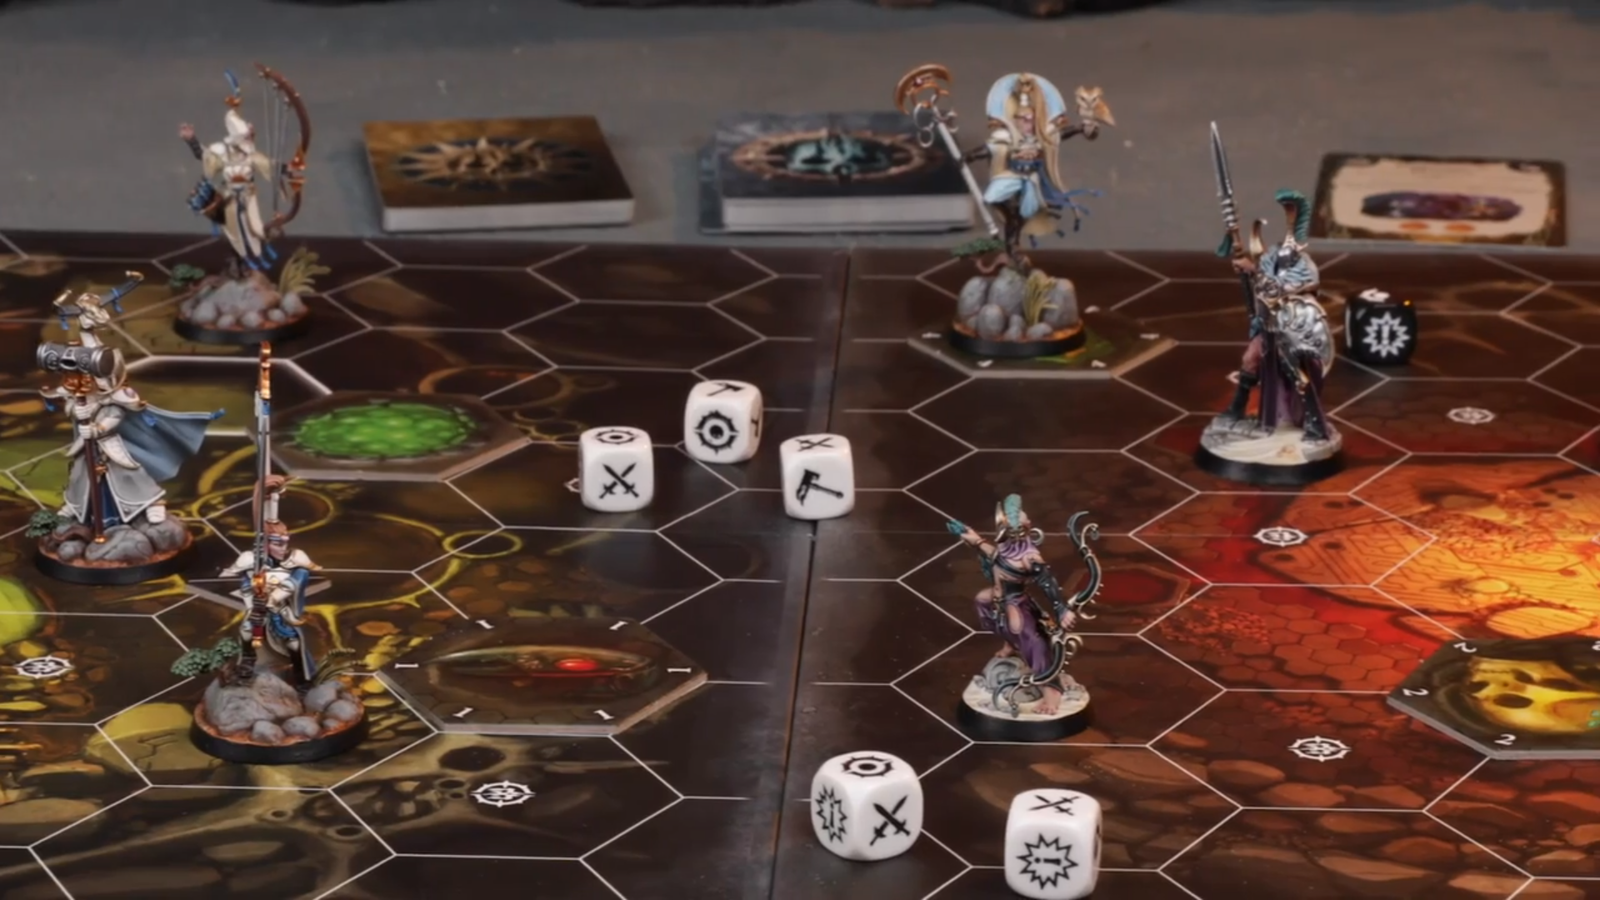 Skirmish Wars: Advance Tactics, Board Game